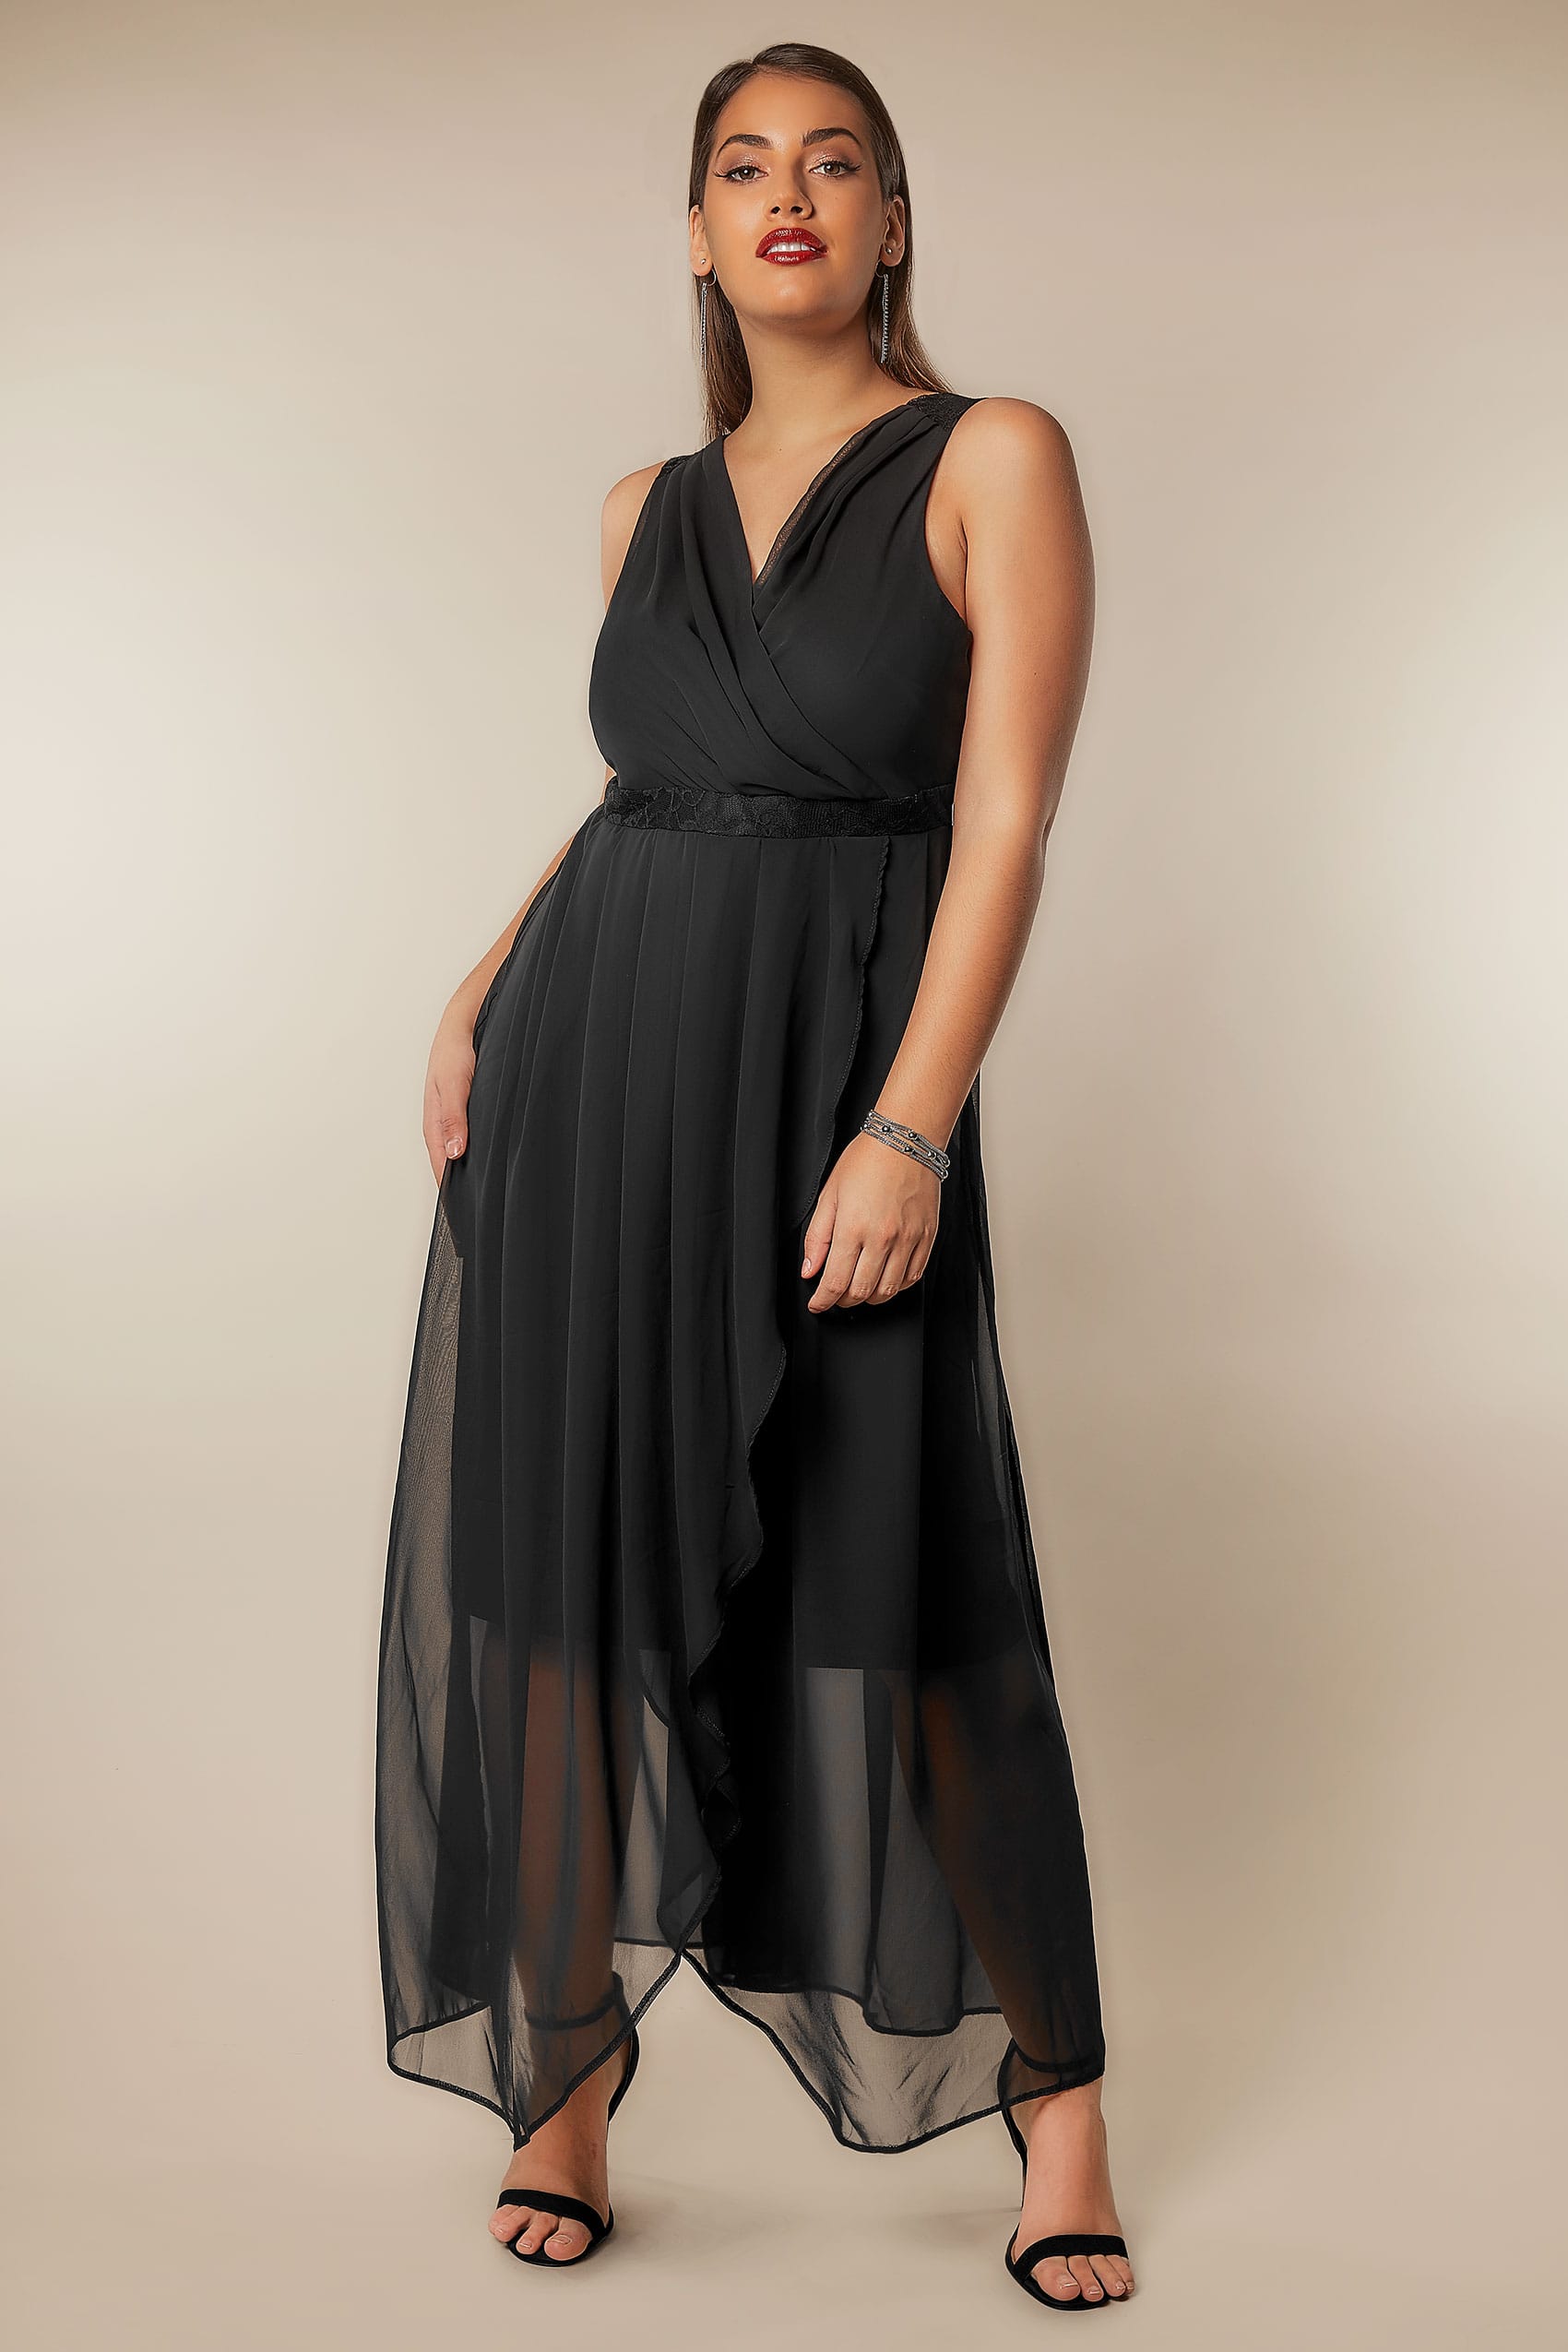 Black Chiffon Maxi Dress With Wrap Front & Lace Details Plus size 16 to 36